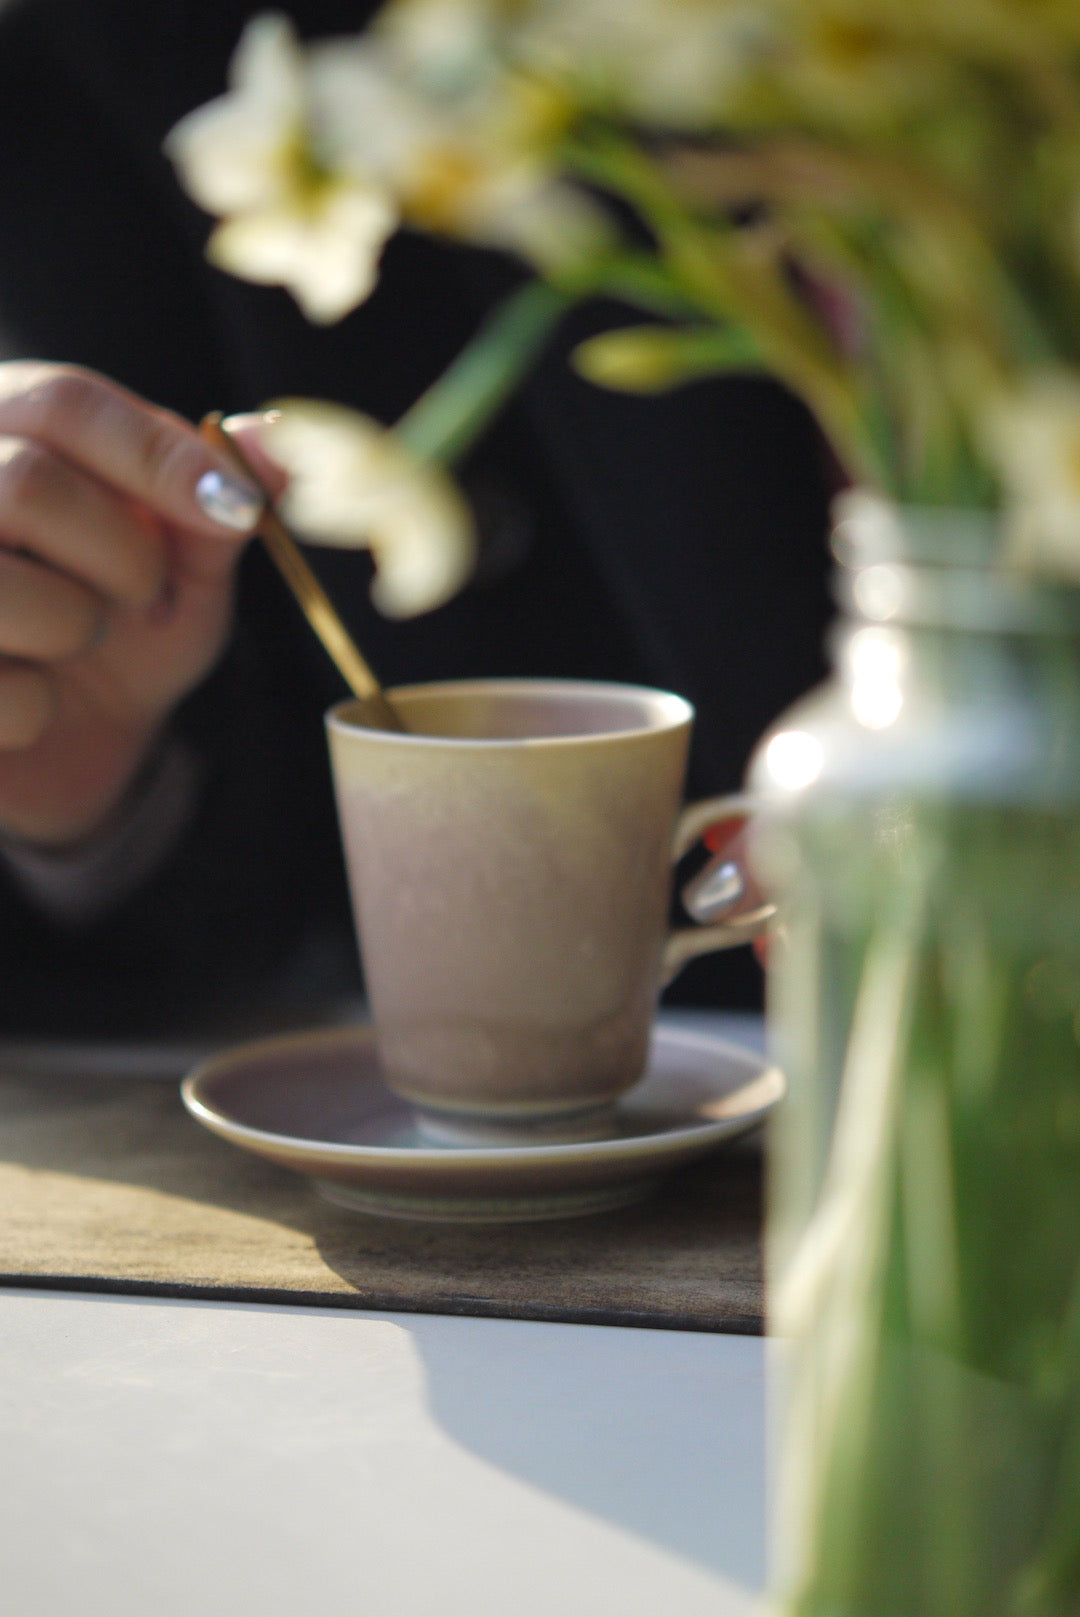 Dehua Porcelain Mug Crack Bliss Vintage Coffee Cup|BestCeramics